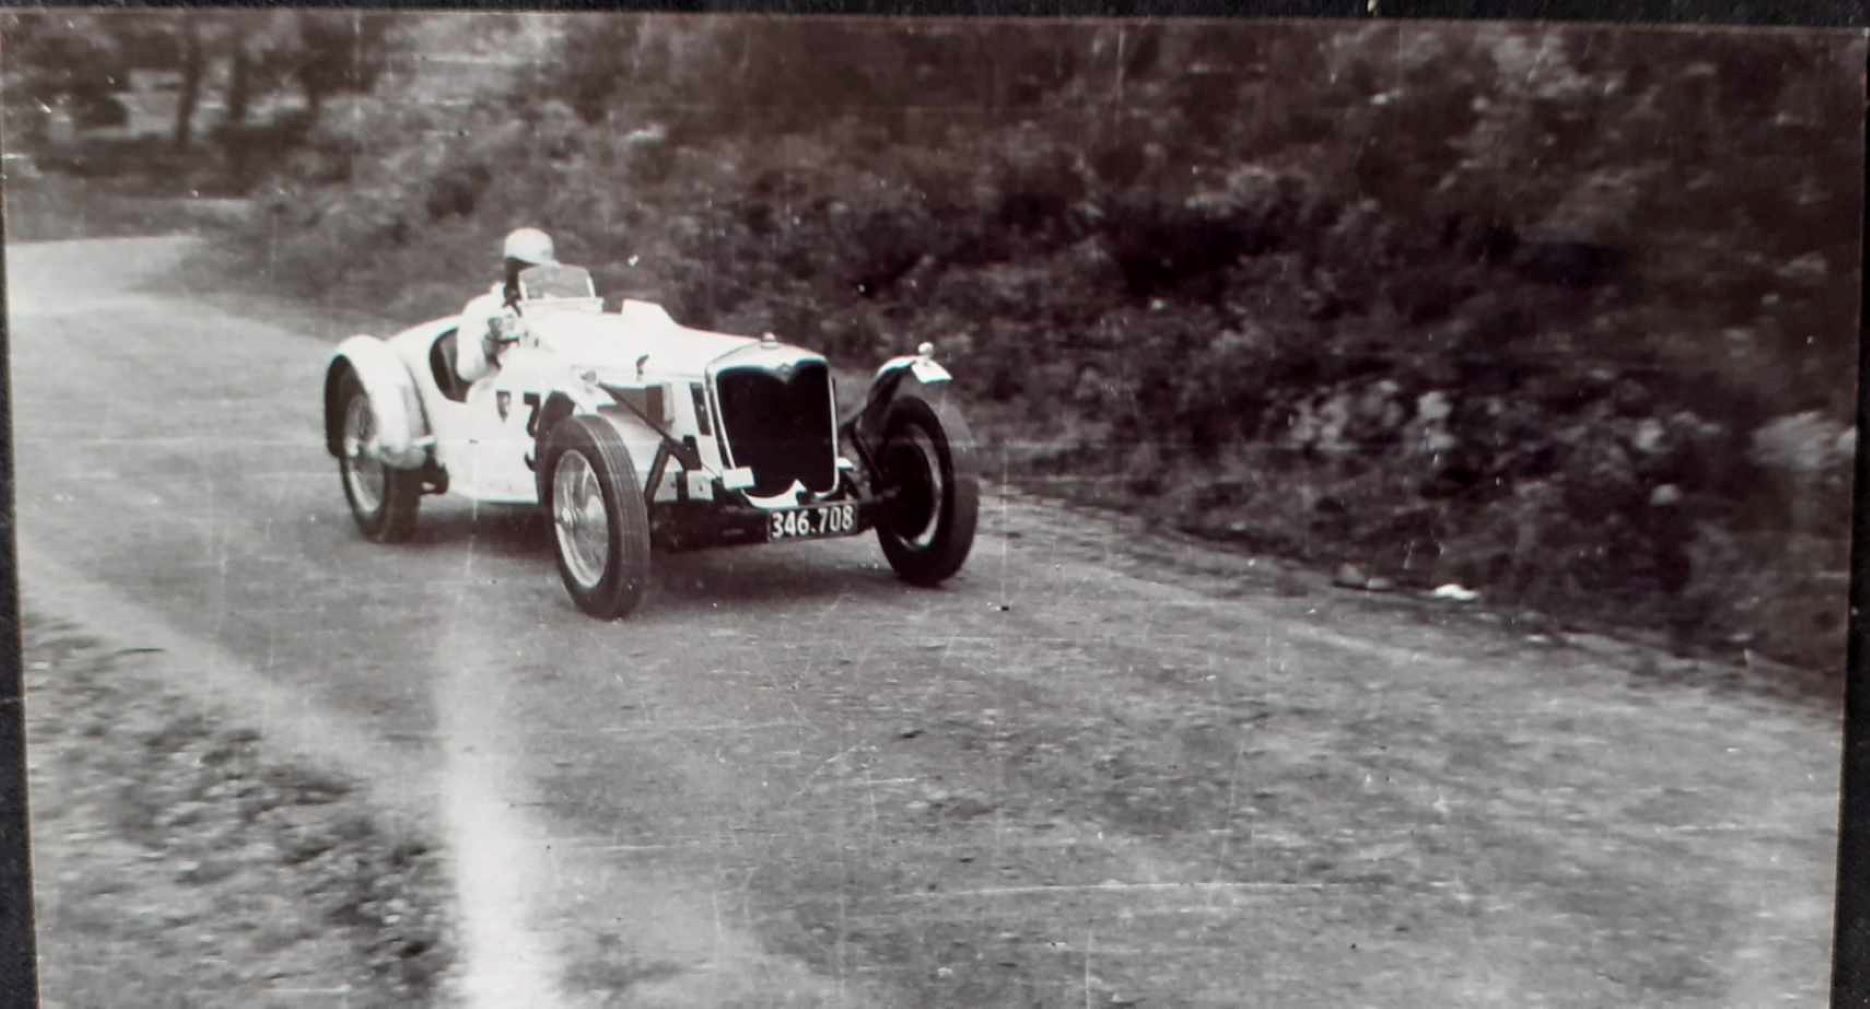 Name:  NSCC 1950 #0122 Riley Race #3 Q at Hill Climb - 346.708 1951 -56 plate 1950's - image Graeme Wel.jpg
Views: 192
Size:  178.4 KB